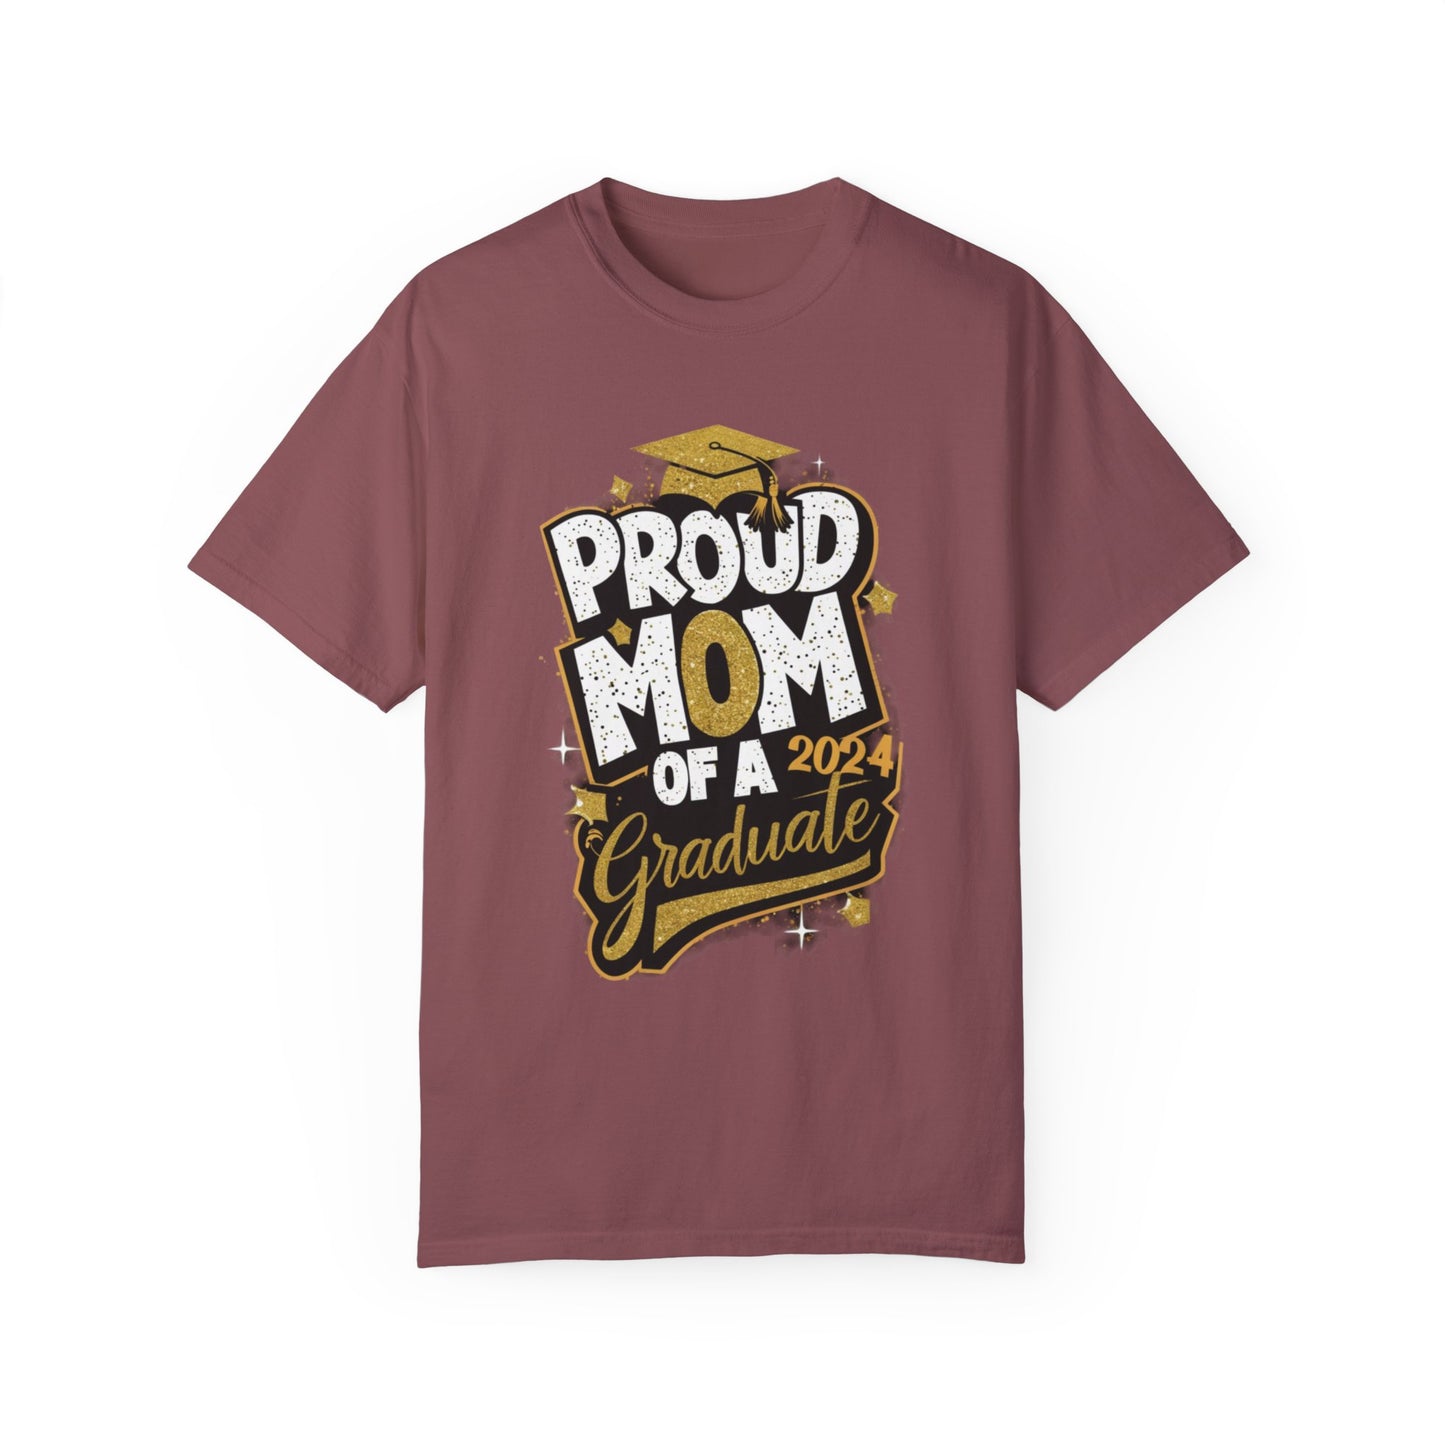 Proud Mom of a 2024 Graduate Unisex Garment-dyed T-shirt Cotton Funny Humorous Graphic Soft Premium Unisex Men Women Brick T-shirt Birthday Gift-5